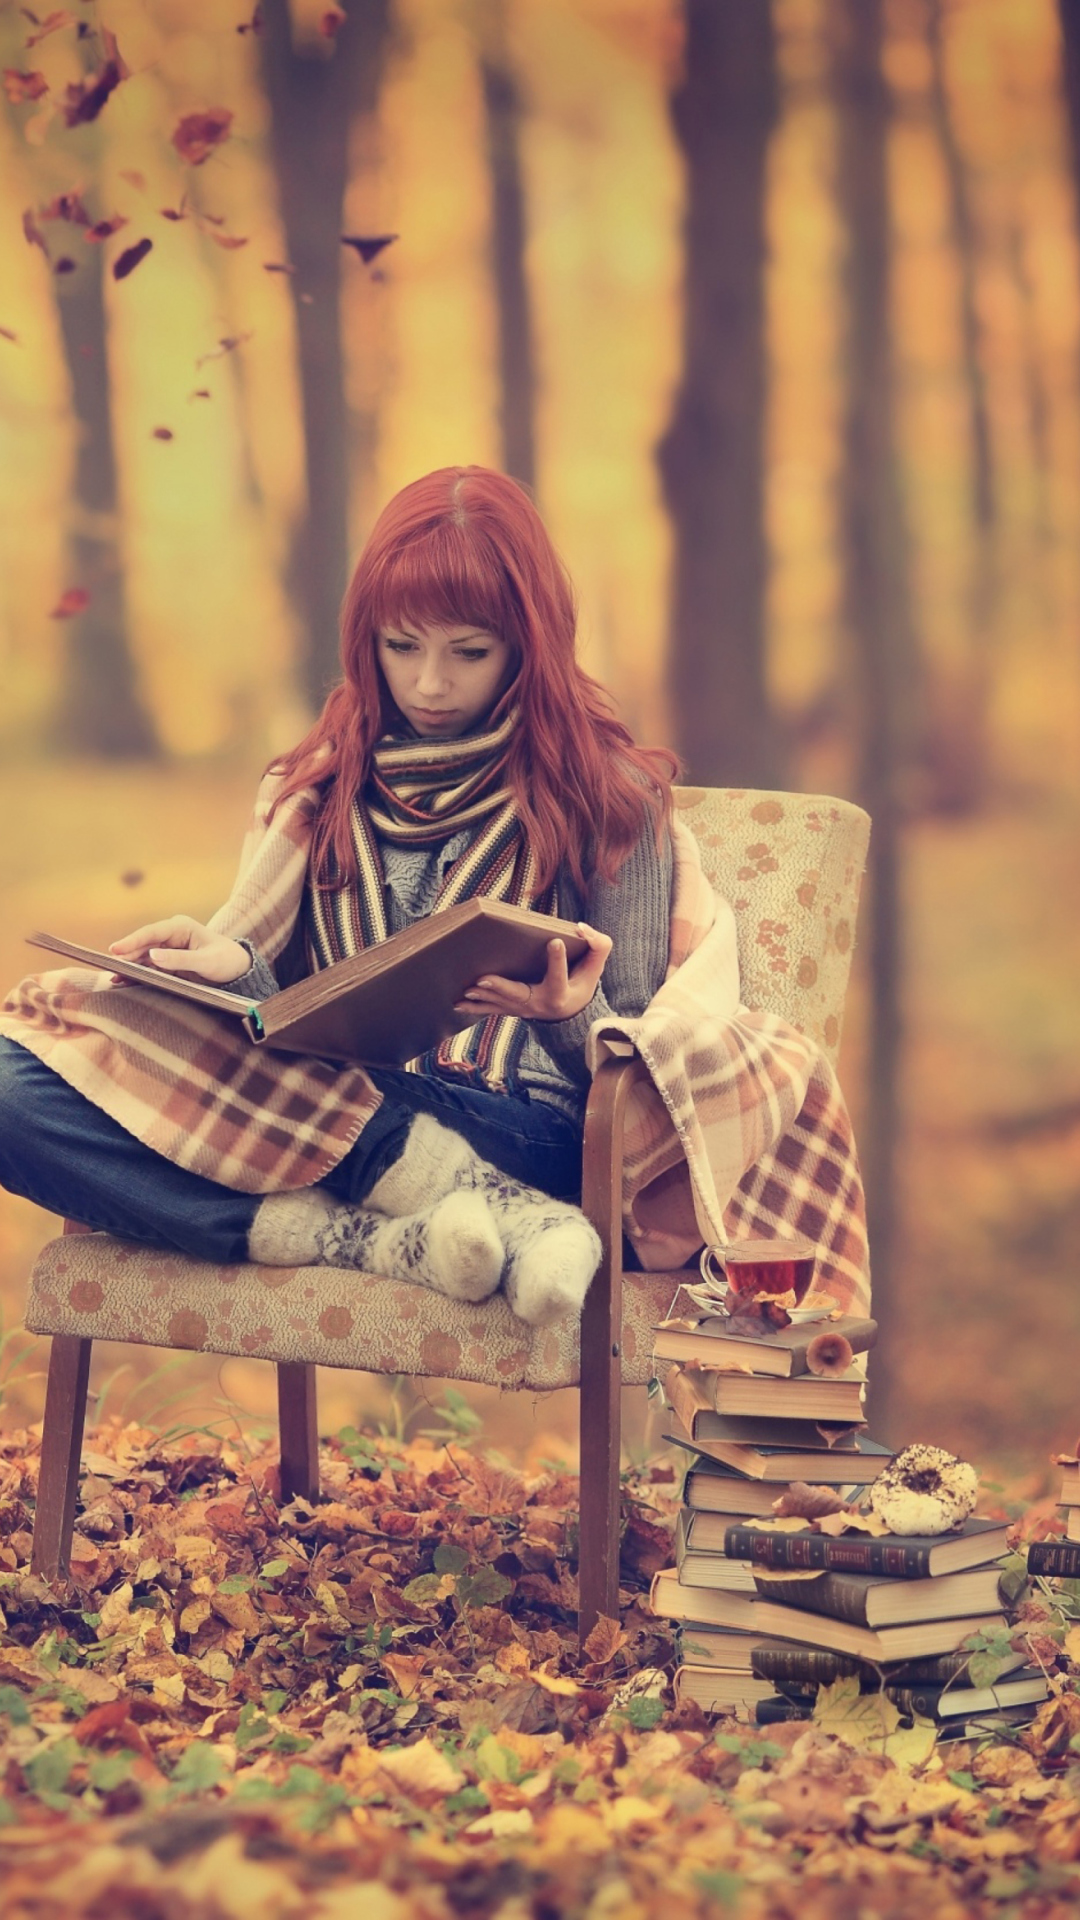 Das Girl Reading Old Books In Autumn Park Wallpaper 1080x1920